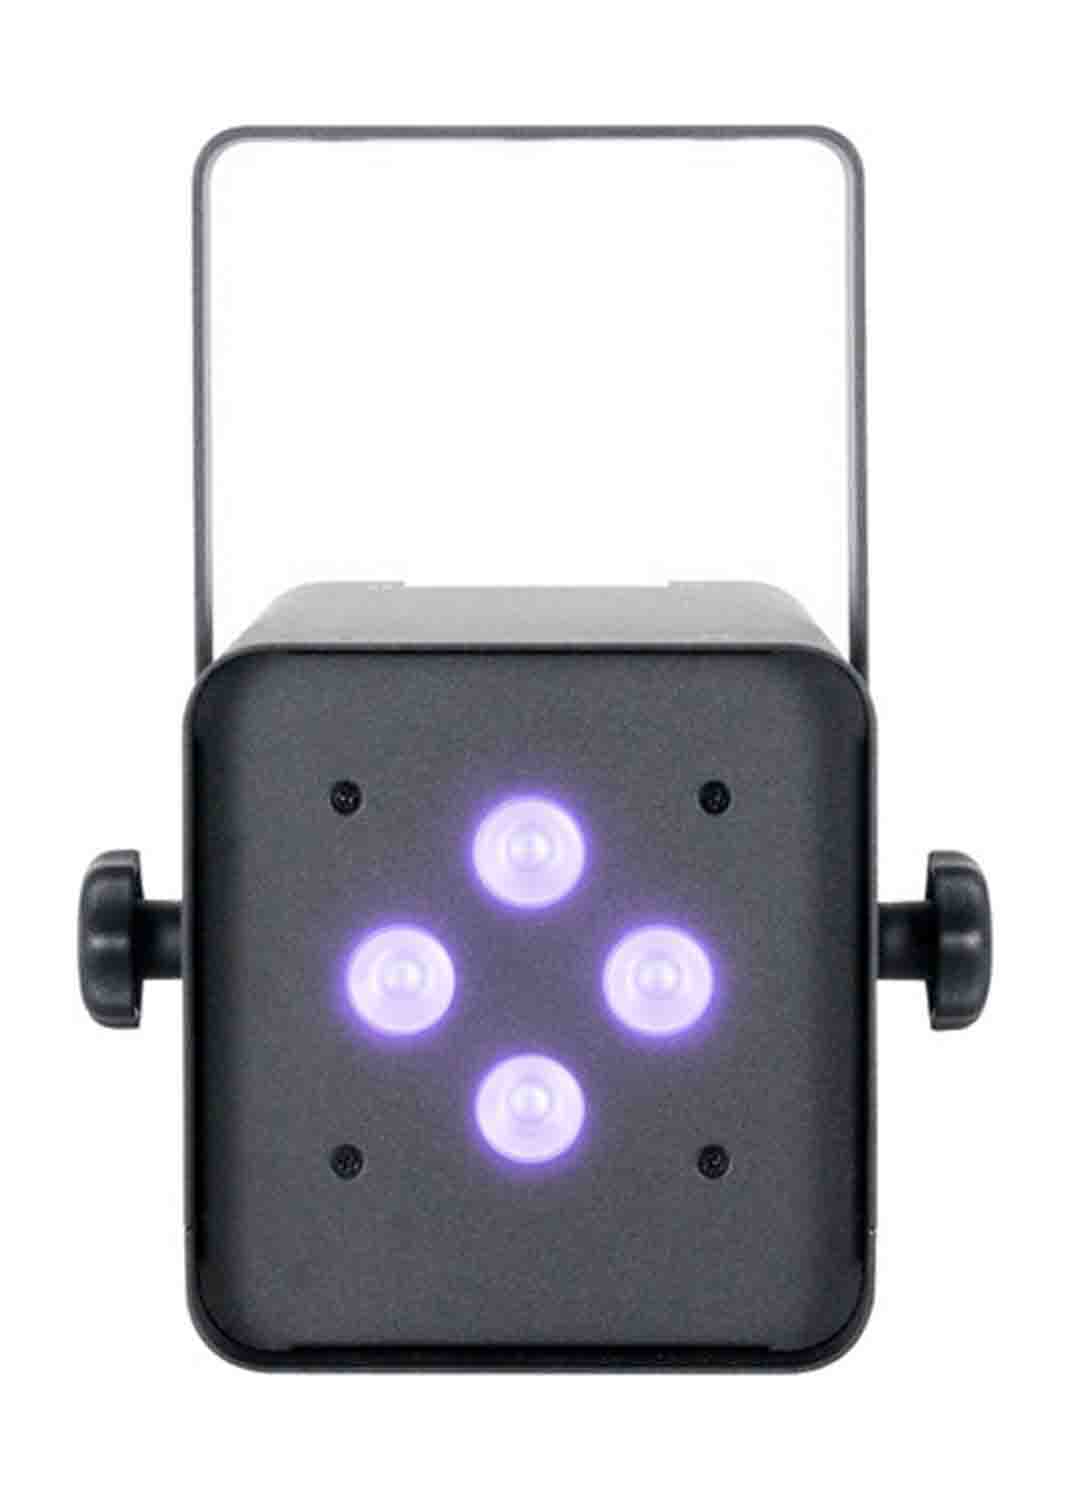 Antari DFX-S1750 High Output UV LED Spot - Hollywood DJ